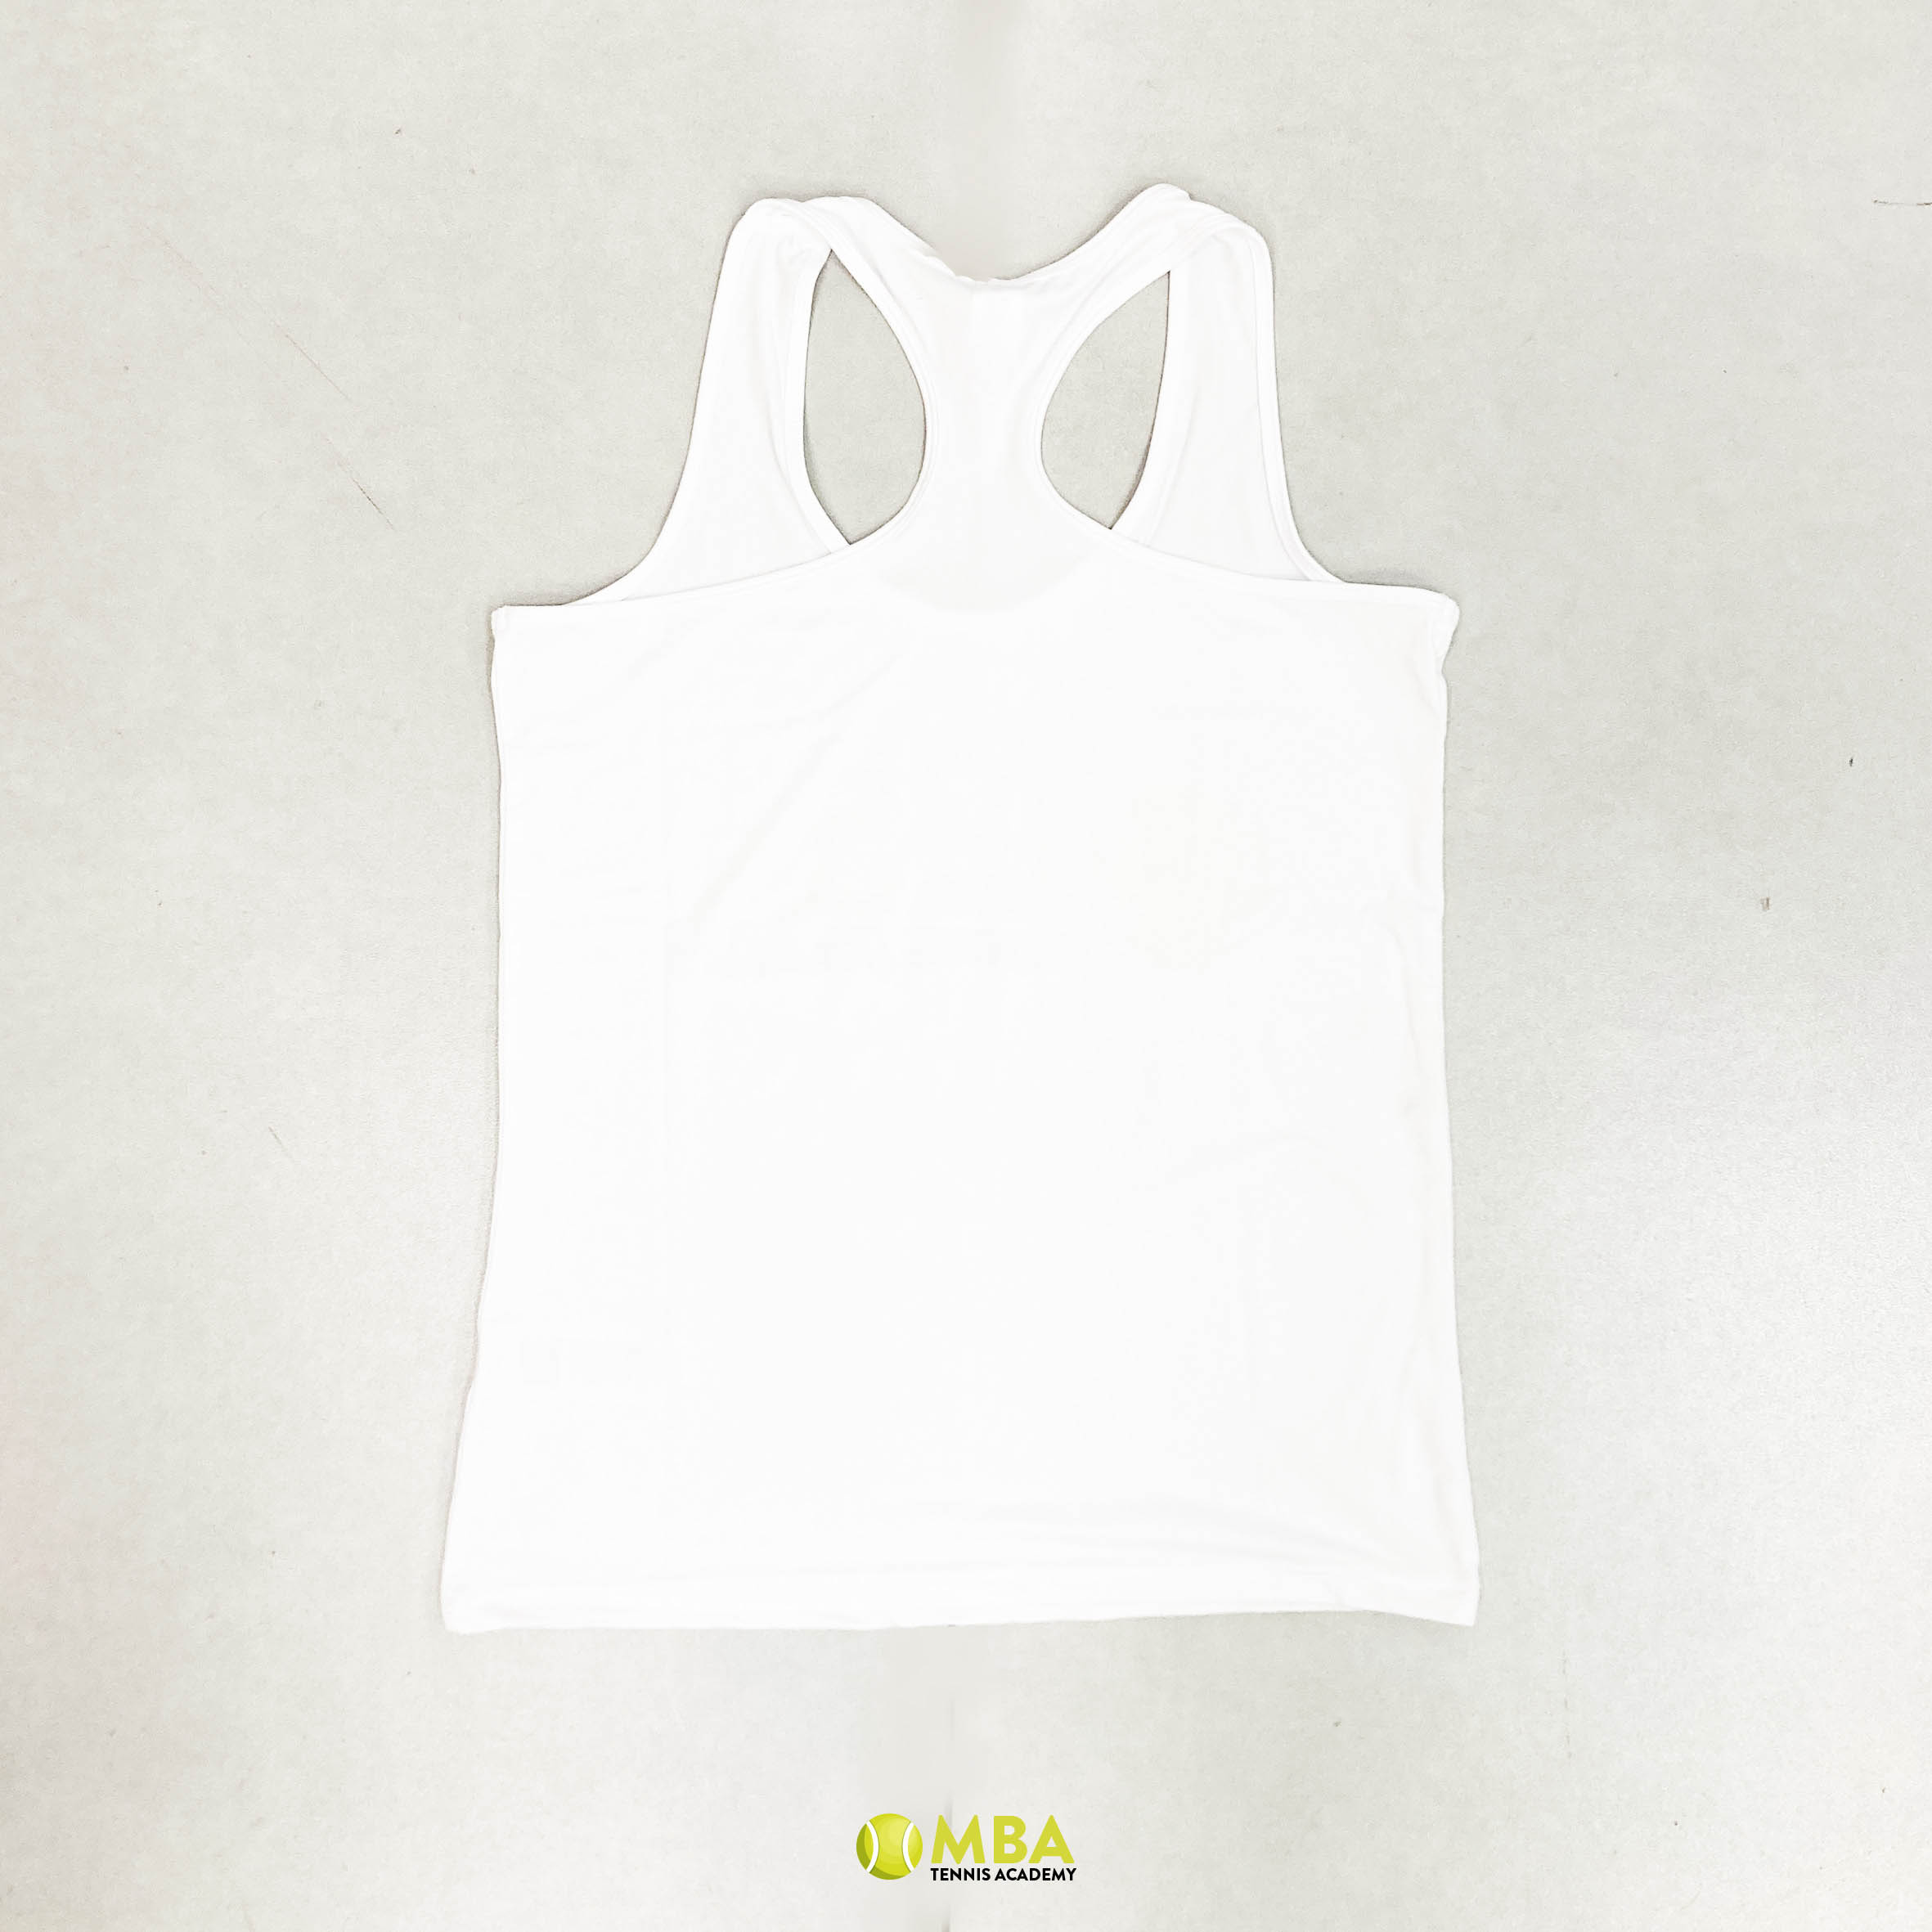 MBA-Tennis-Academy-Camiseta-blanca-mujer-3